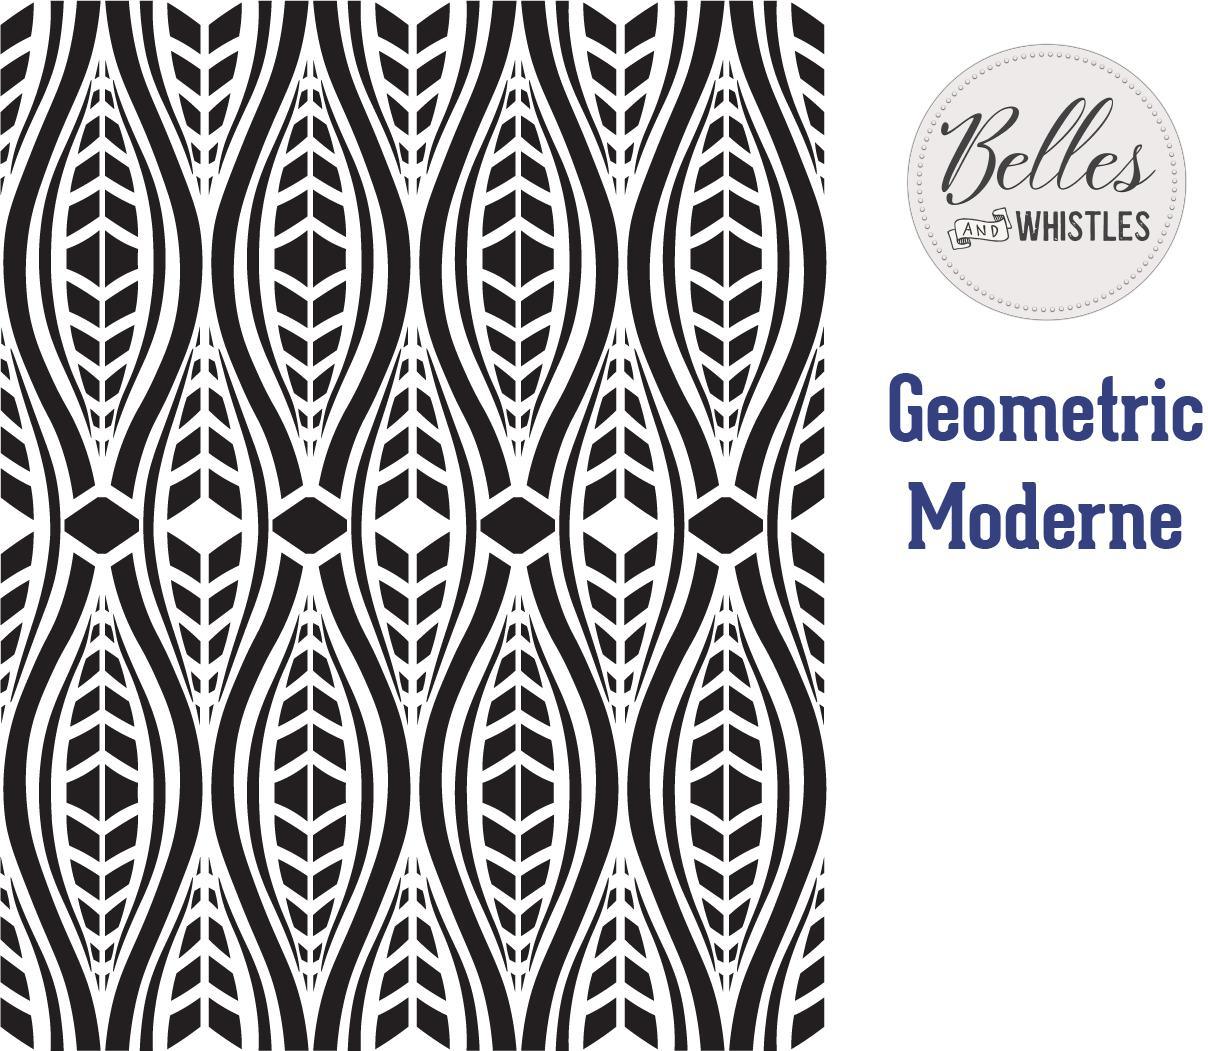 Schablone | Belles & Whistles | Geometric Moderne